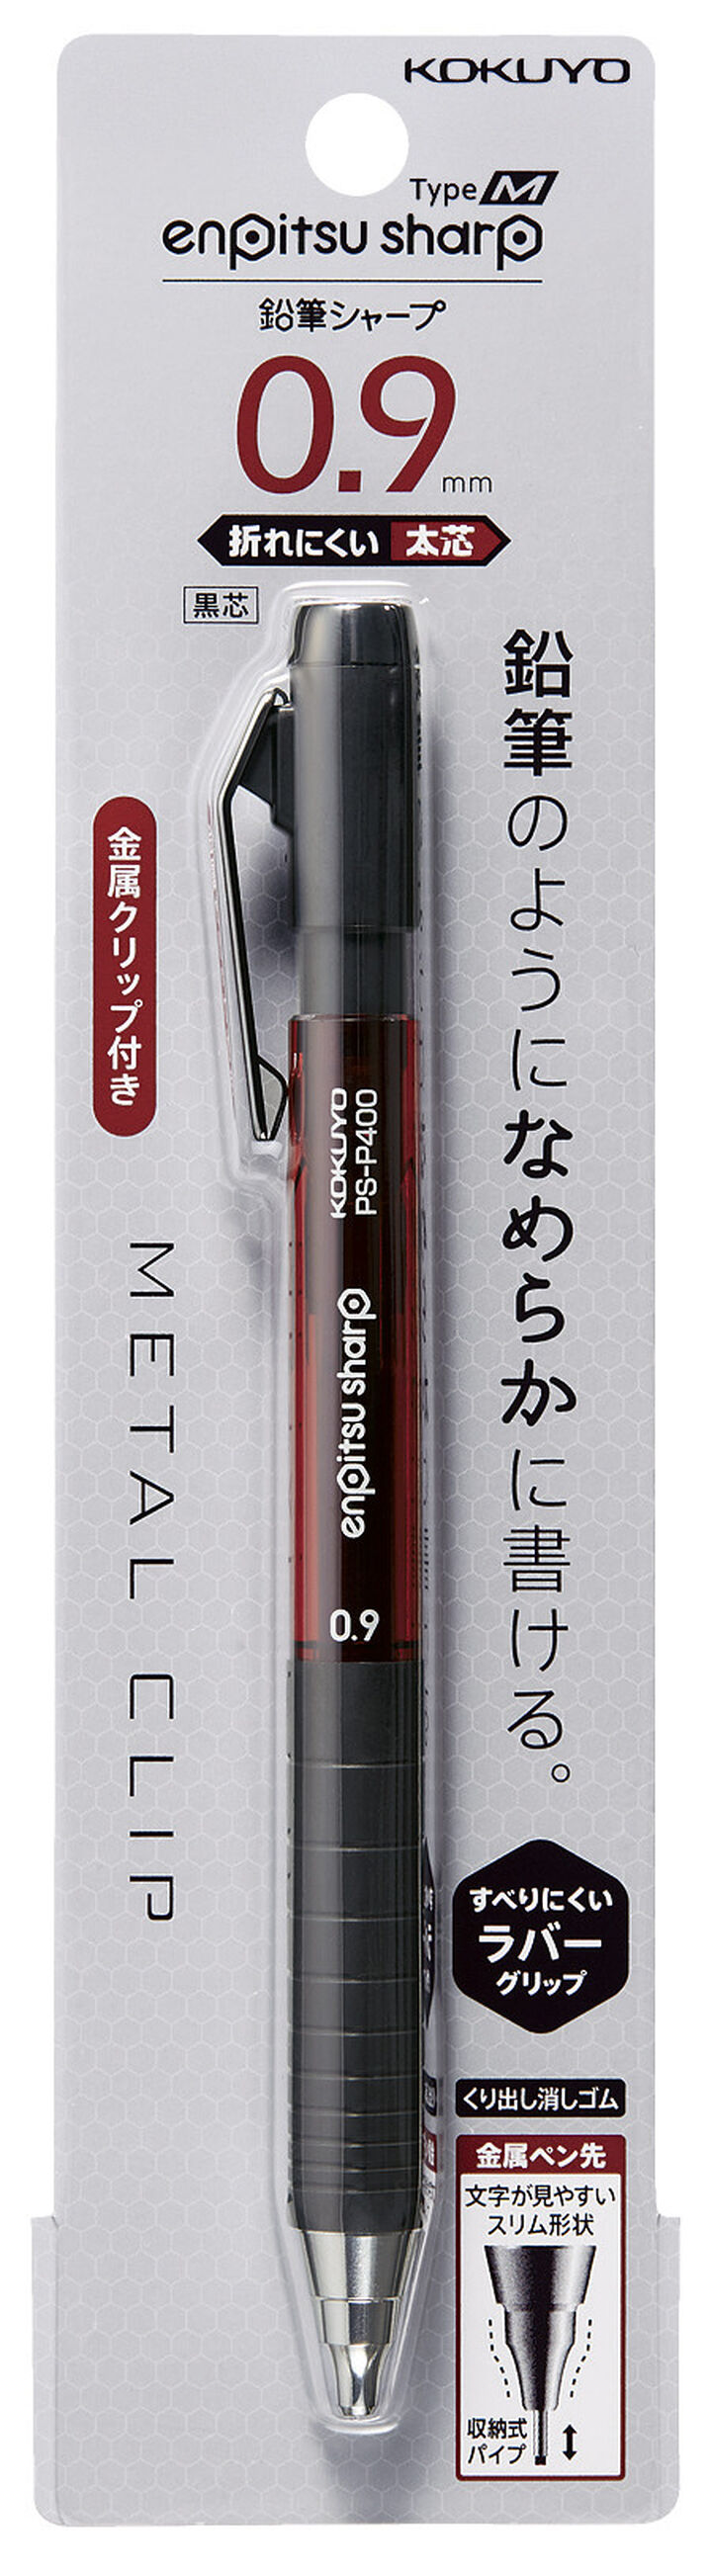 Enpitsu sharp mechanical pencil TypeM 0.9mm Rubber Grip,Red, medium image number 1